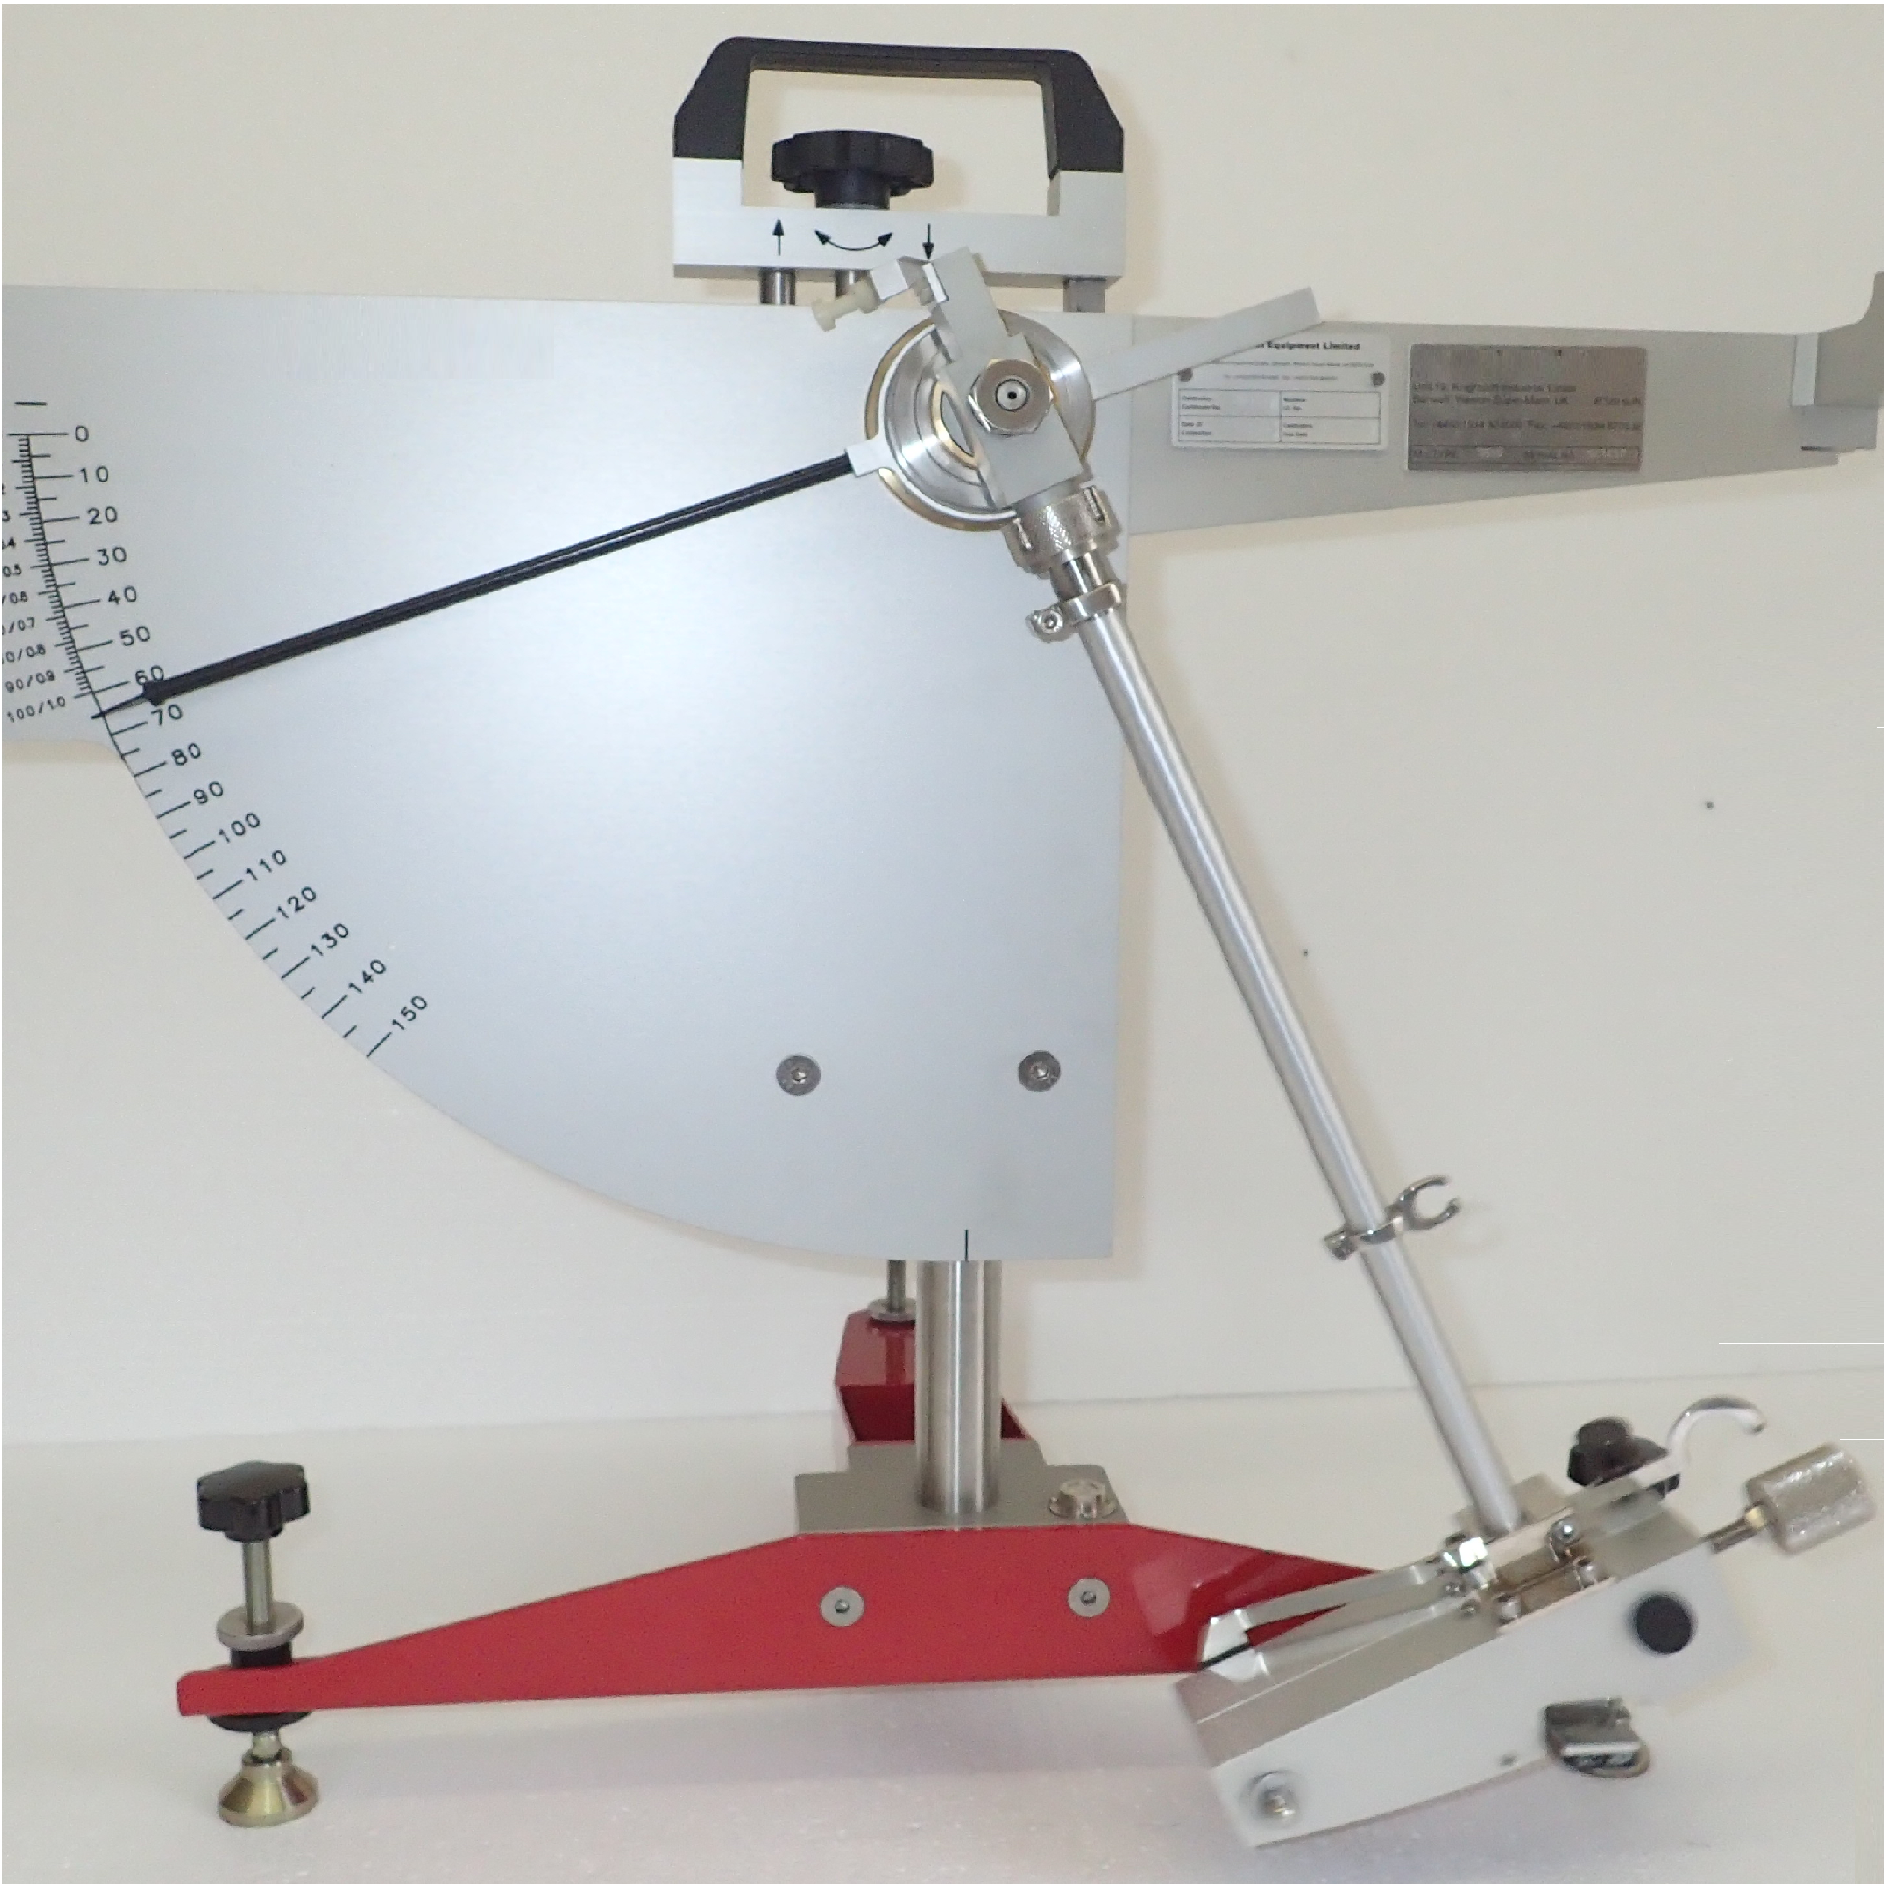 Pendulum Test Equipment used for floor slip resistance testing